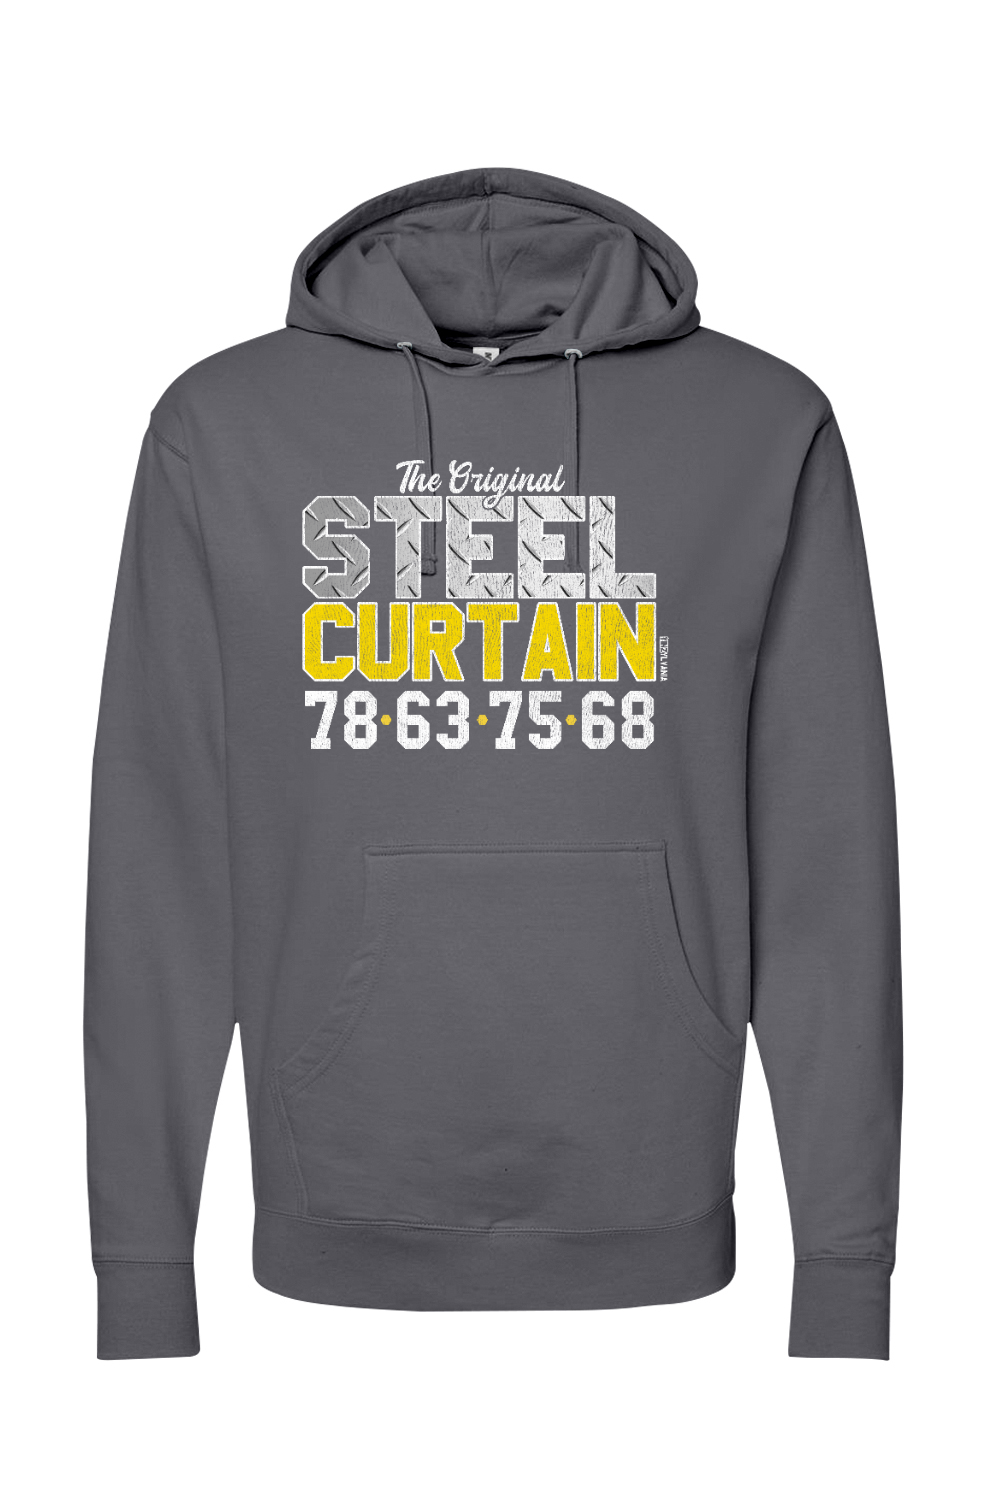 The Original Steel Curtain - Hoodie - Yinzylvania